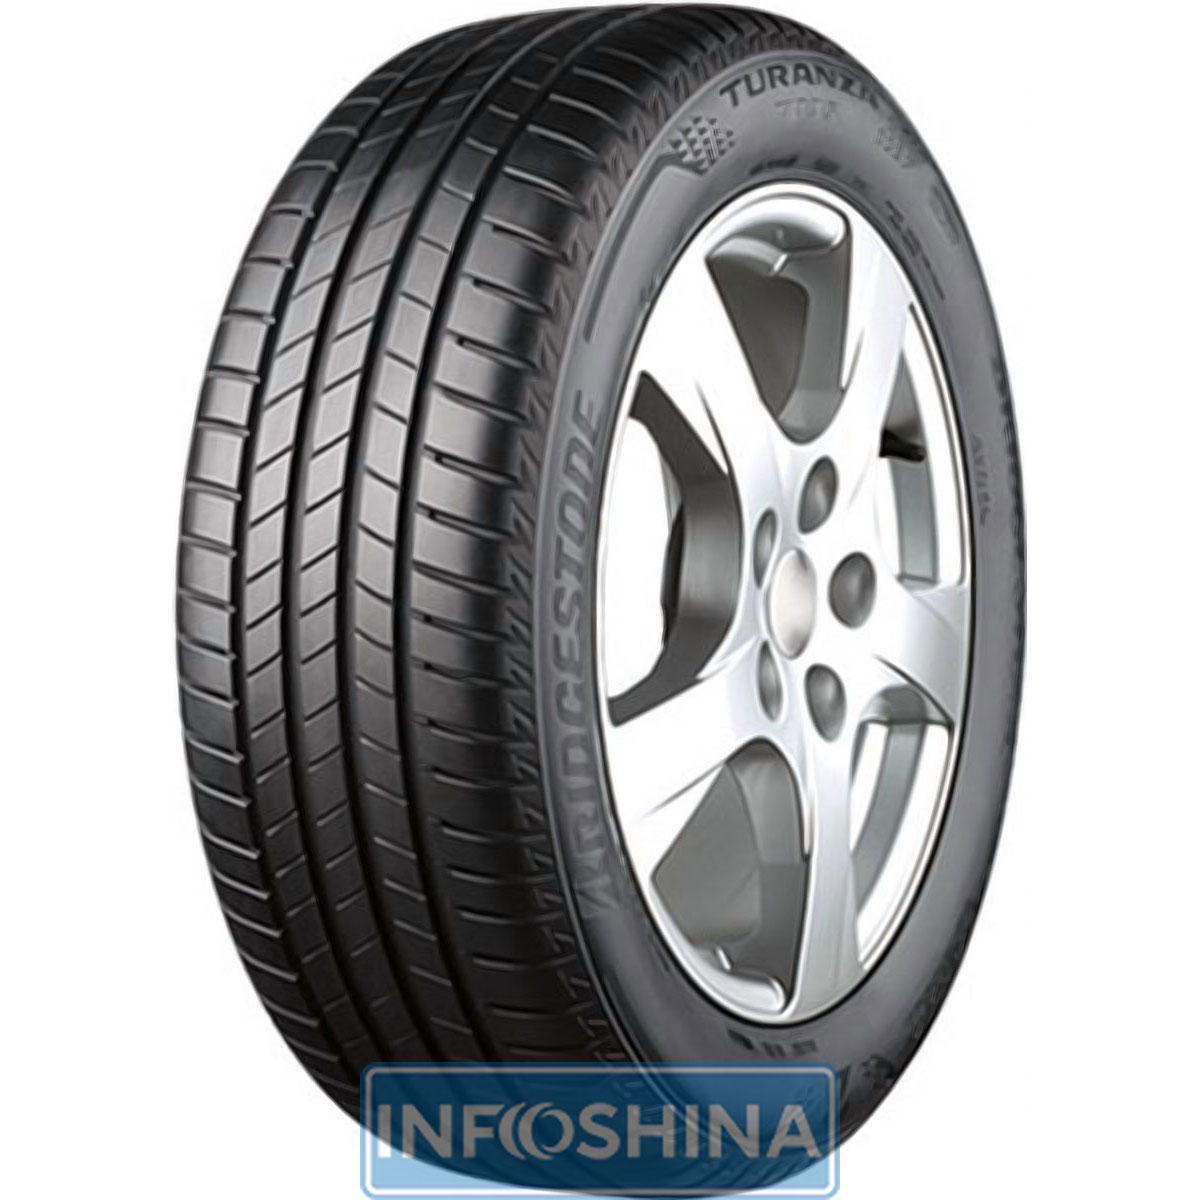 Купить шины Bridgestone Turanza T005 185/65 R15 88T